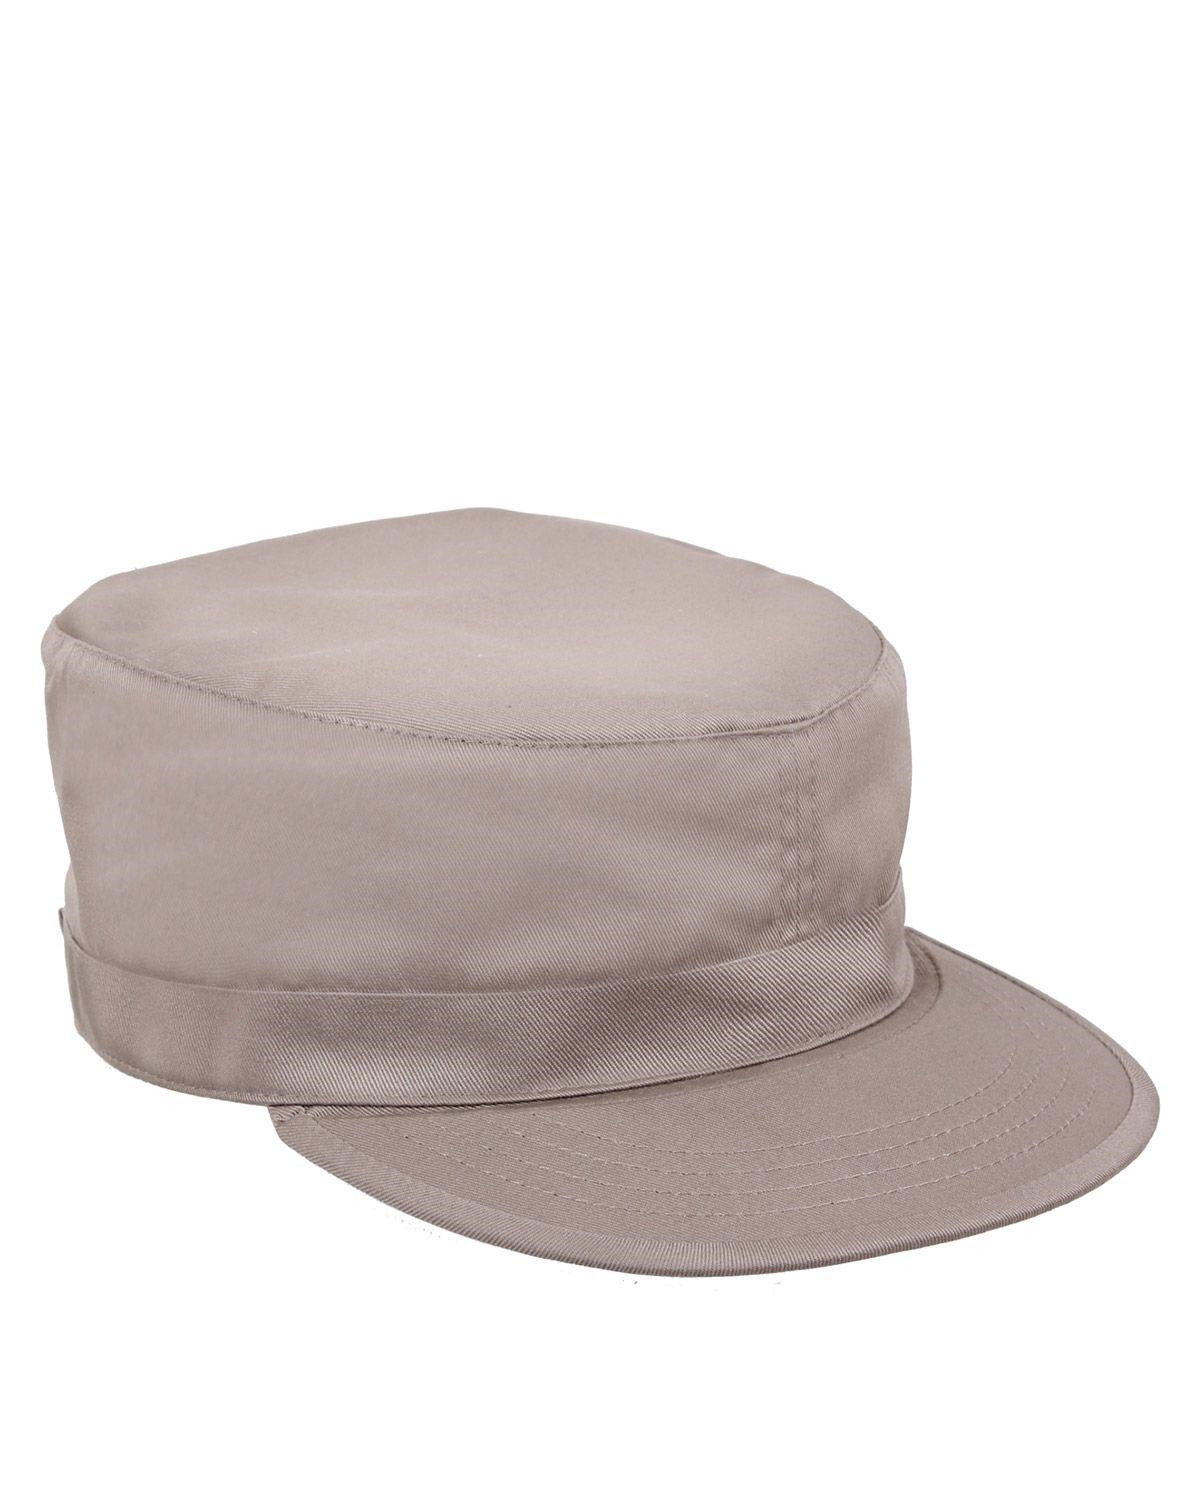 Rothco Military Fatigue Cap - Justerbar (Khaki, One Size)